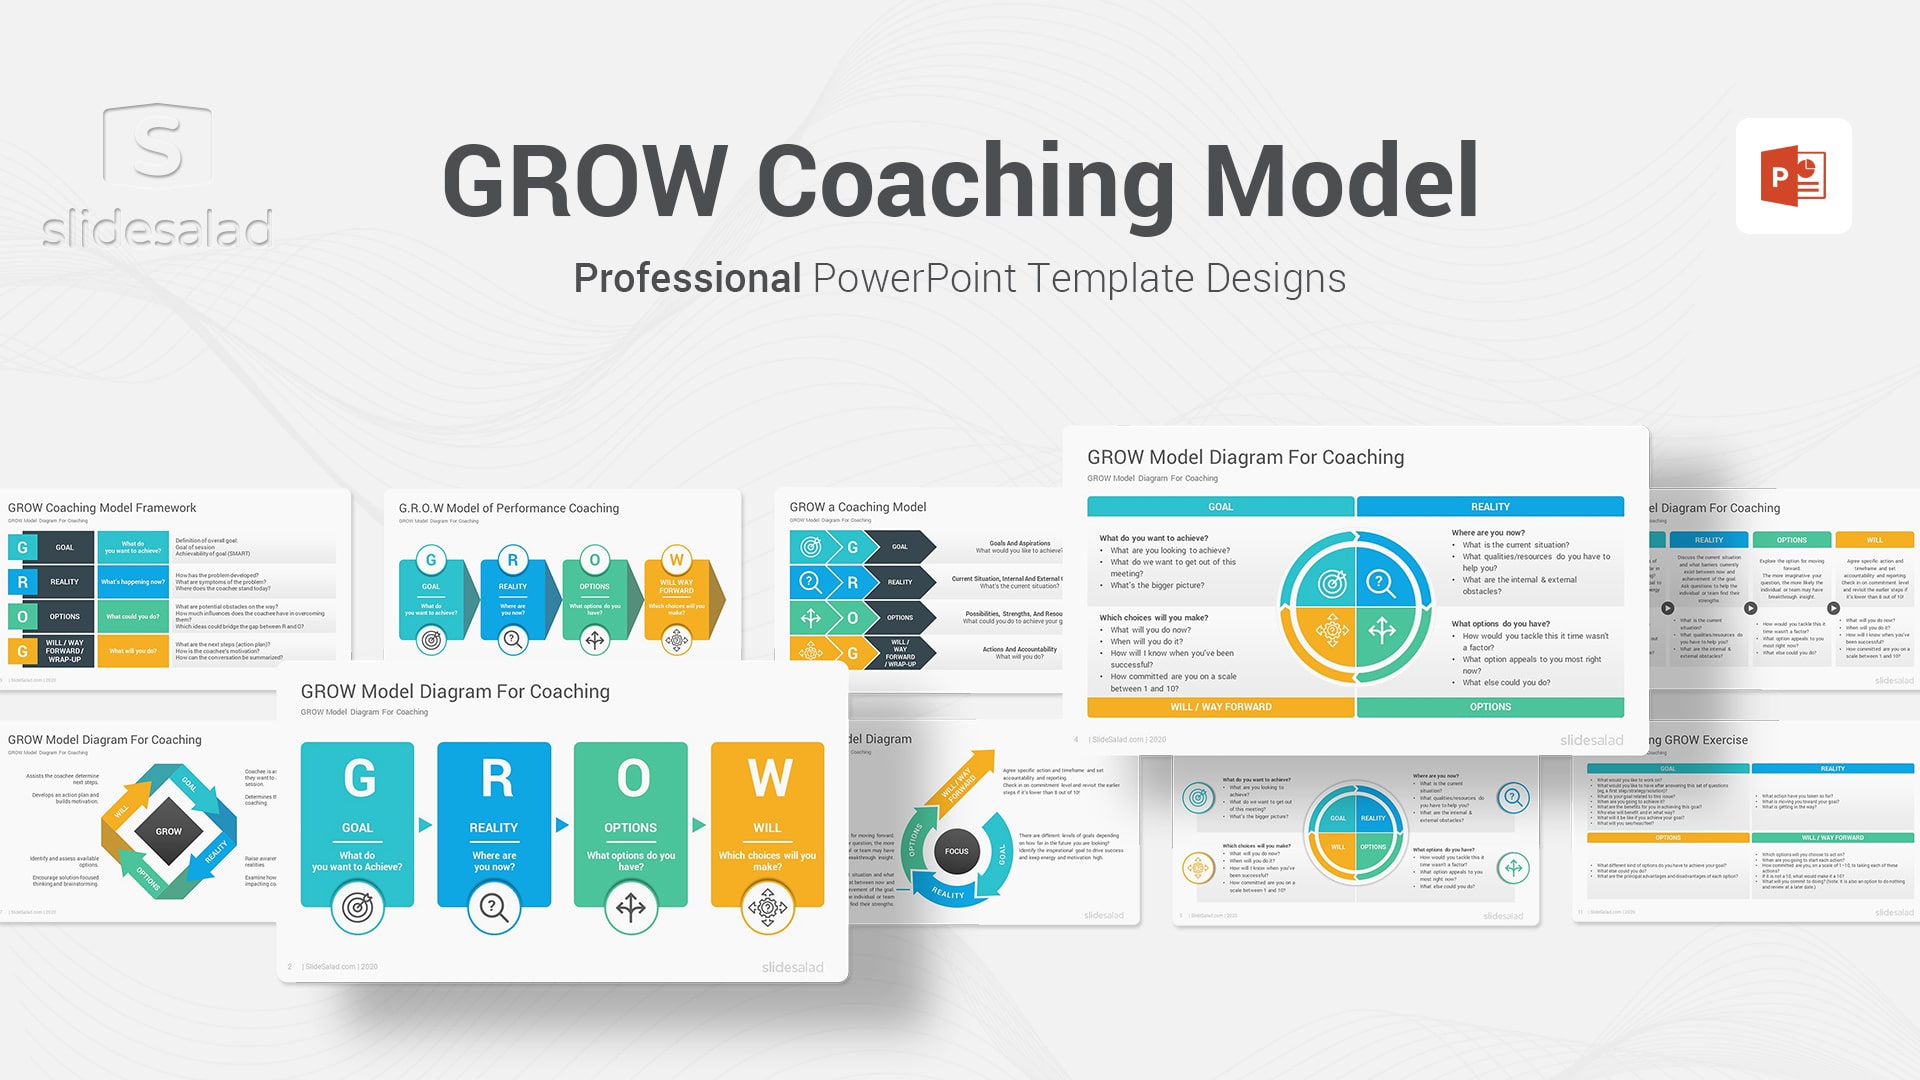 GROW Coaching Model PowerPoint Template - Sir John Whitmore's GROW Coaching Model Framework PPT Template